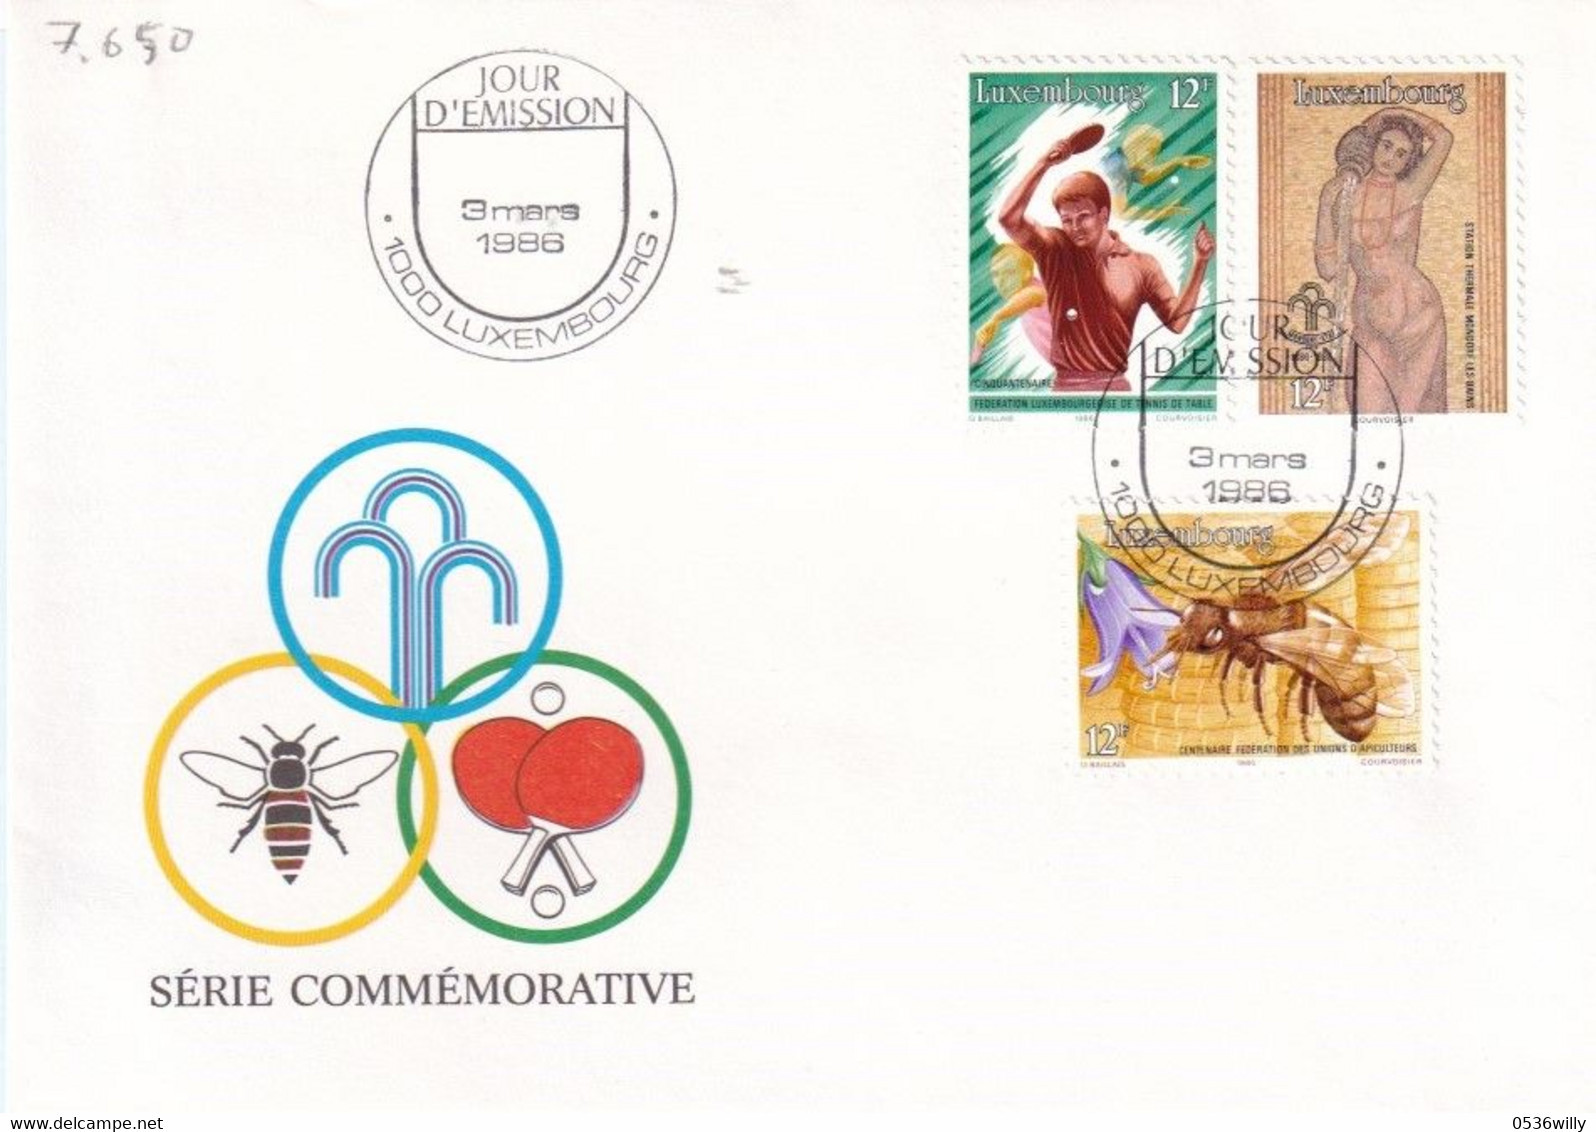 Luxembourg 1986 - FDC Jahresereignisse (7.650) - Storia Postale